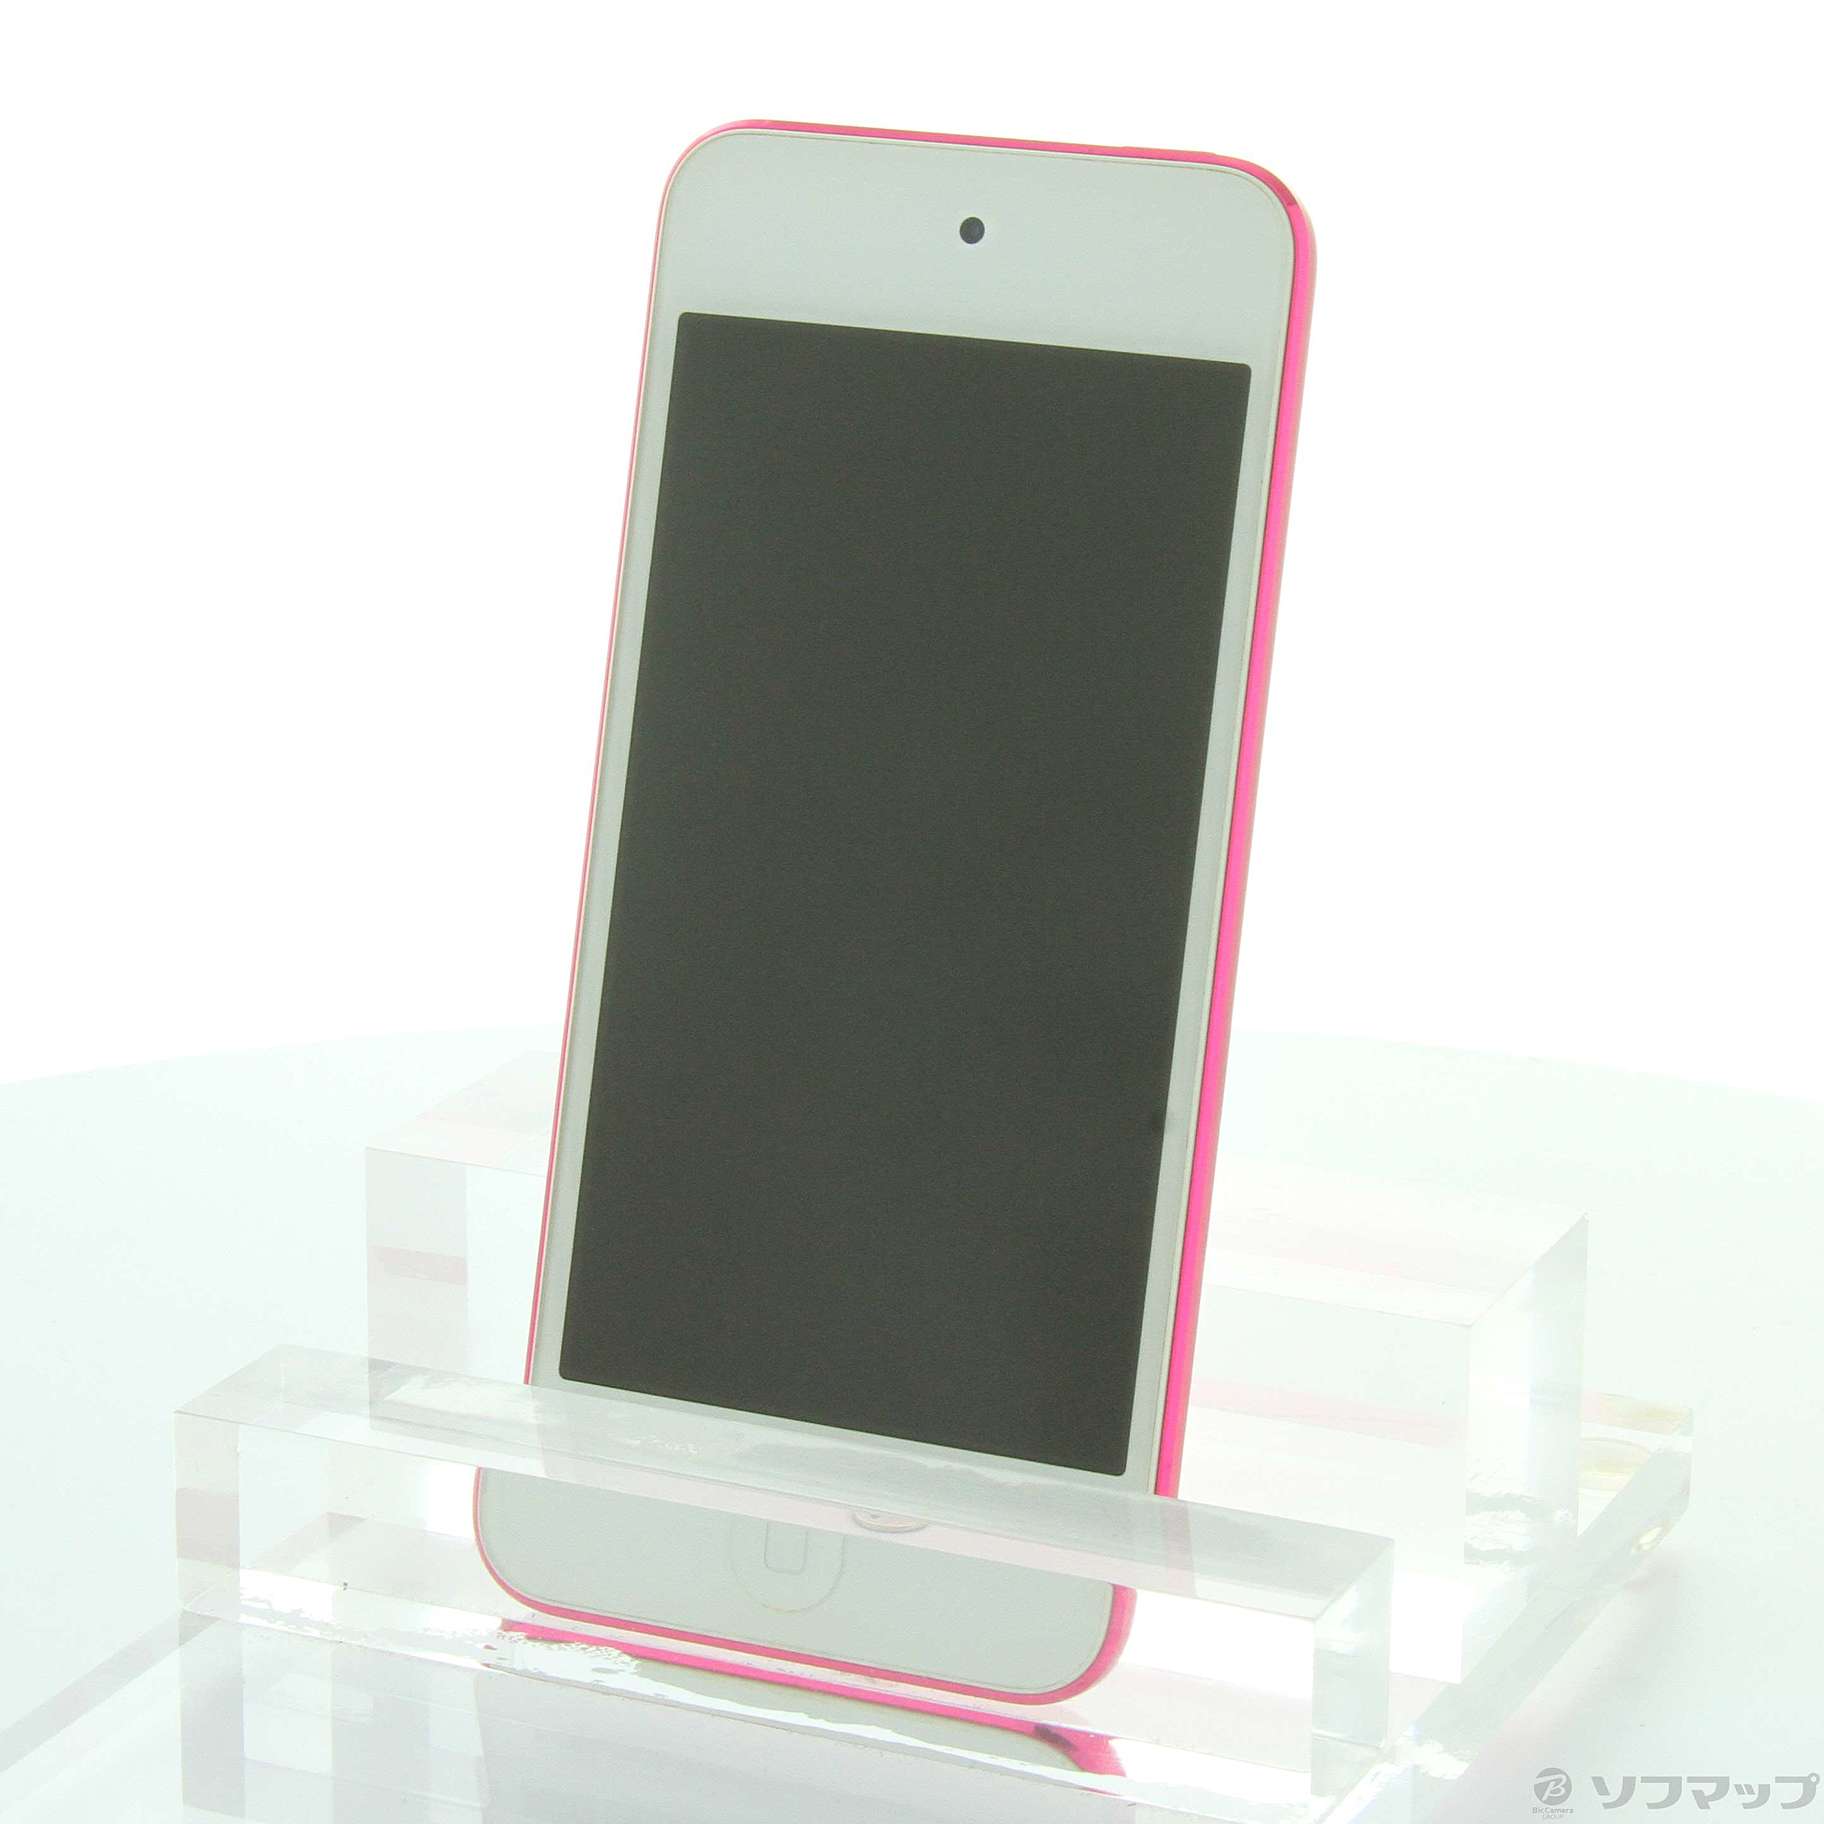 Apple 第6世代 iPod touch MKGX2J/A ピンク/16GB新品未開封です 